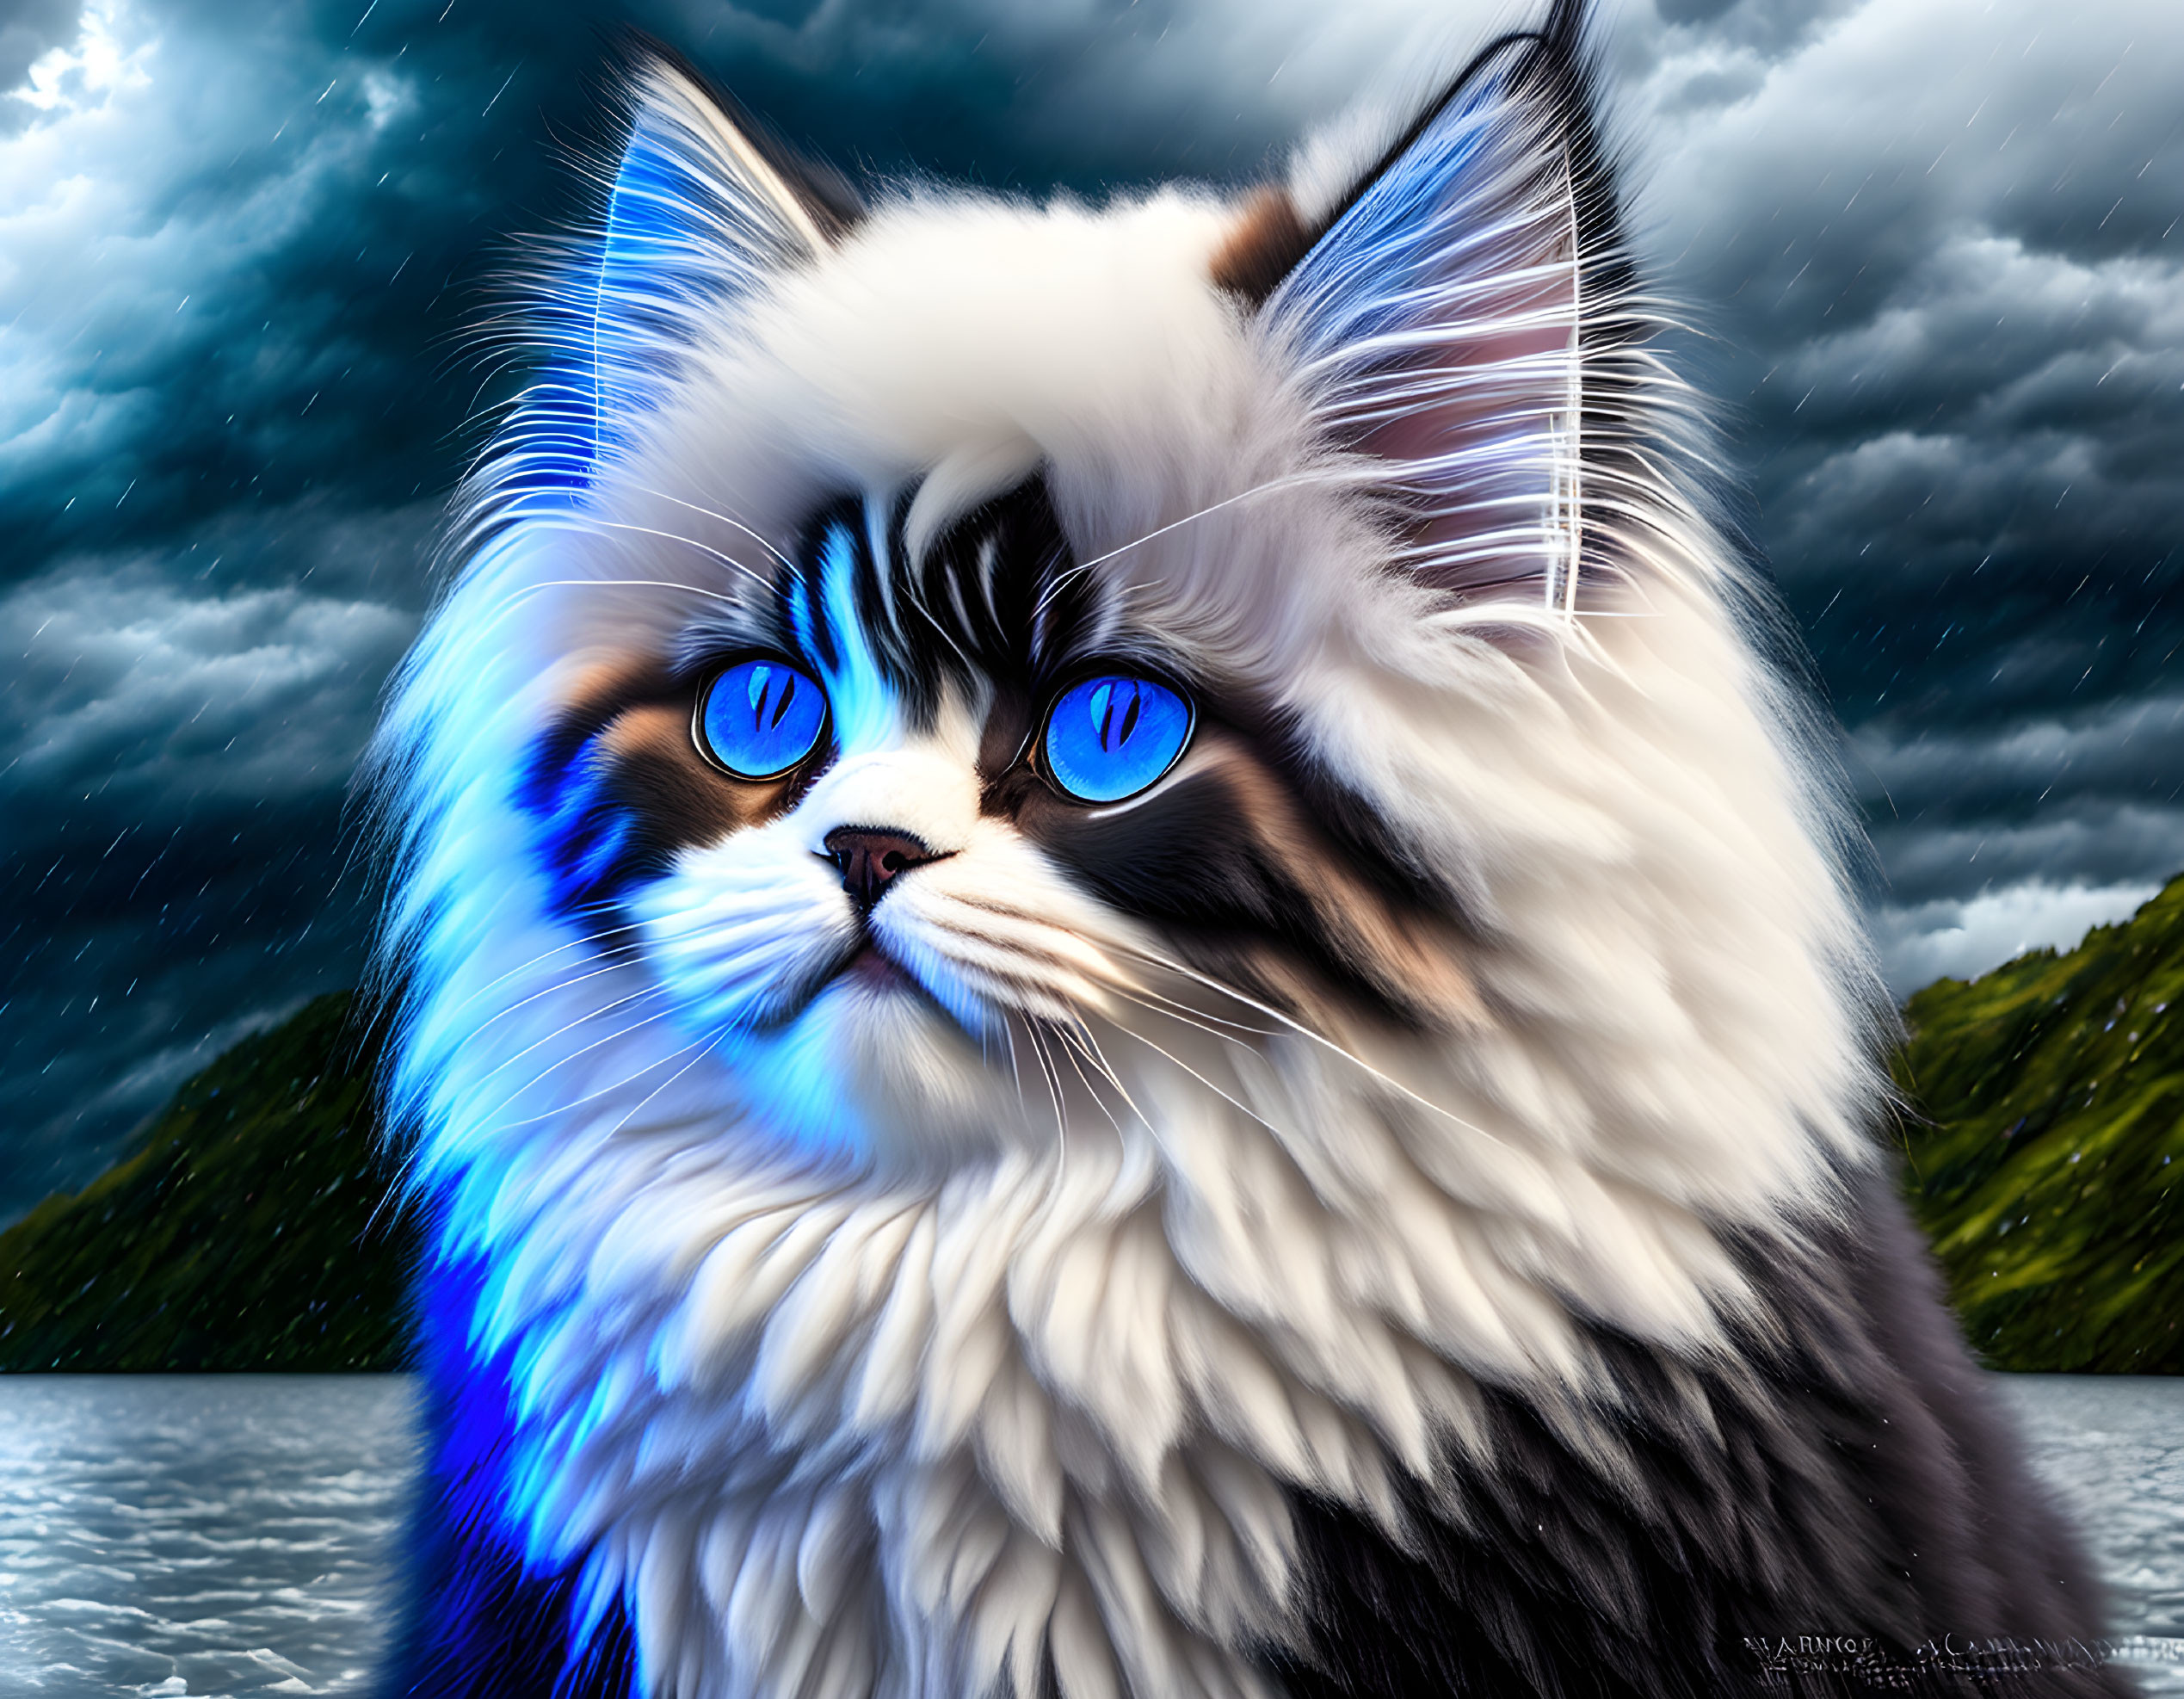 Stylized cat illustration with blue eyes and dramatic backdrop